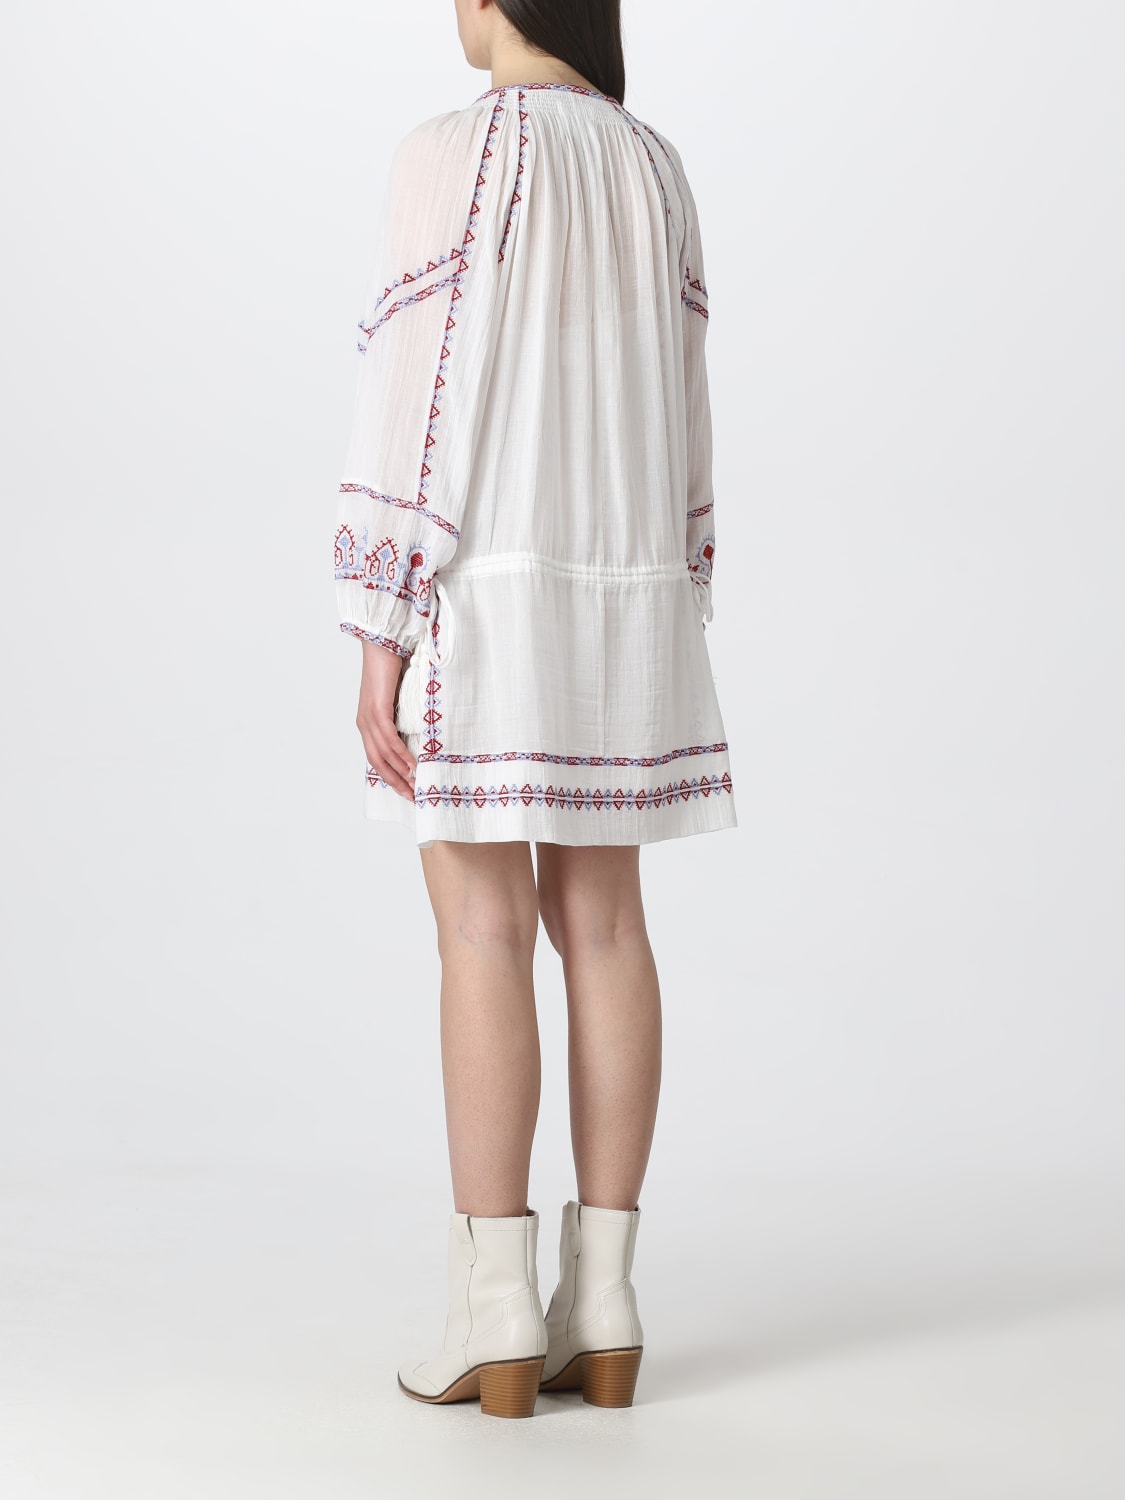 ISABEL MARANT dress for woman - White | Isabel Marant Etoile dress RO0039FAA1J56E online on GIGLIO.COM